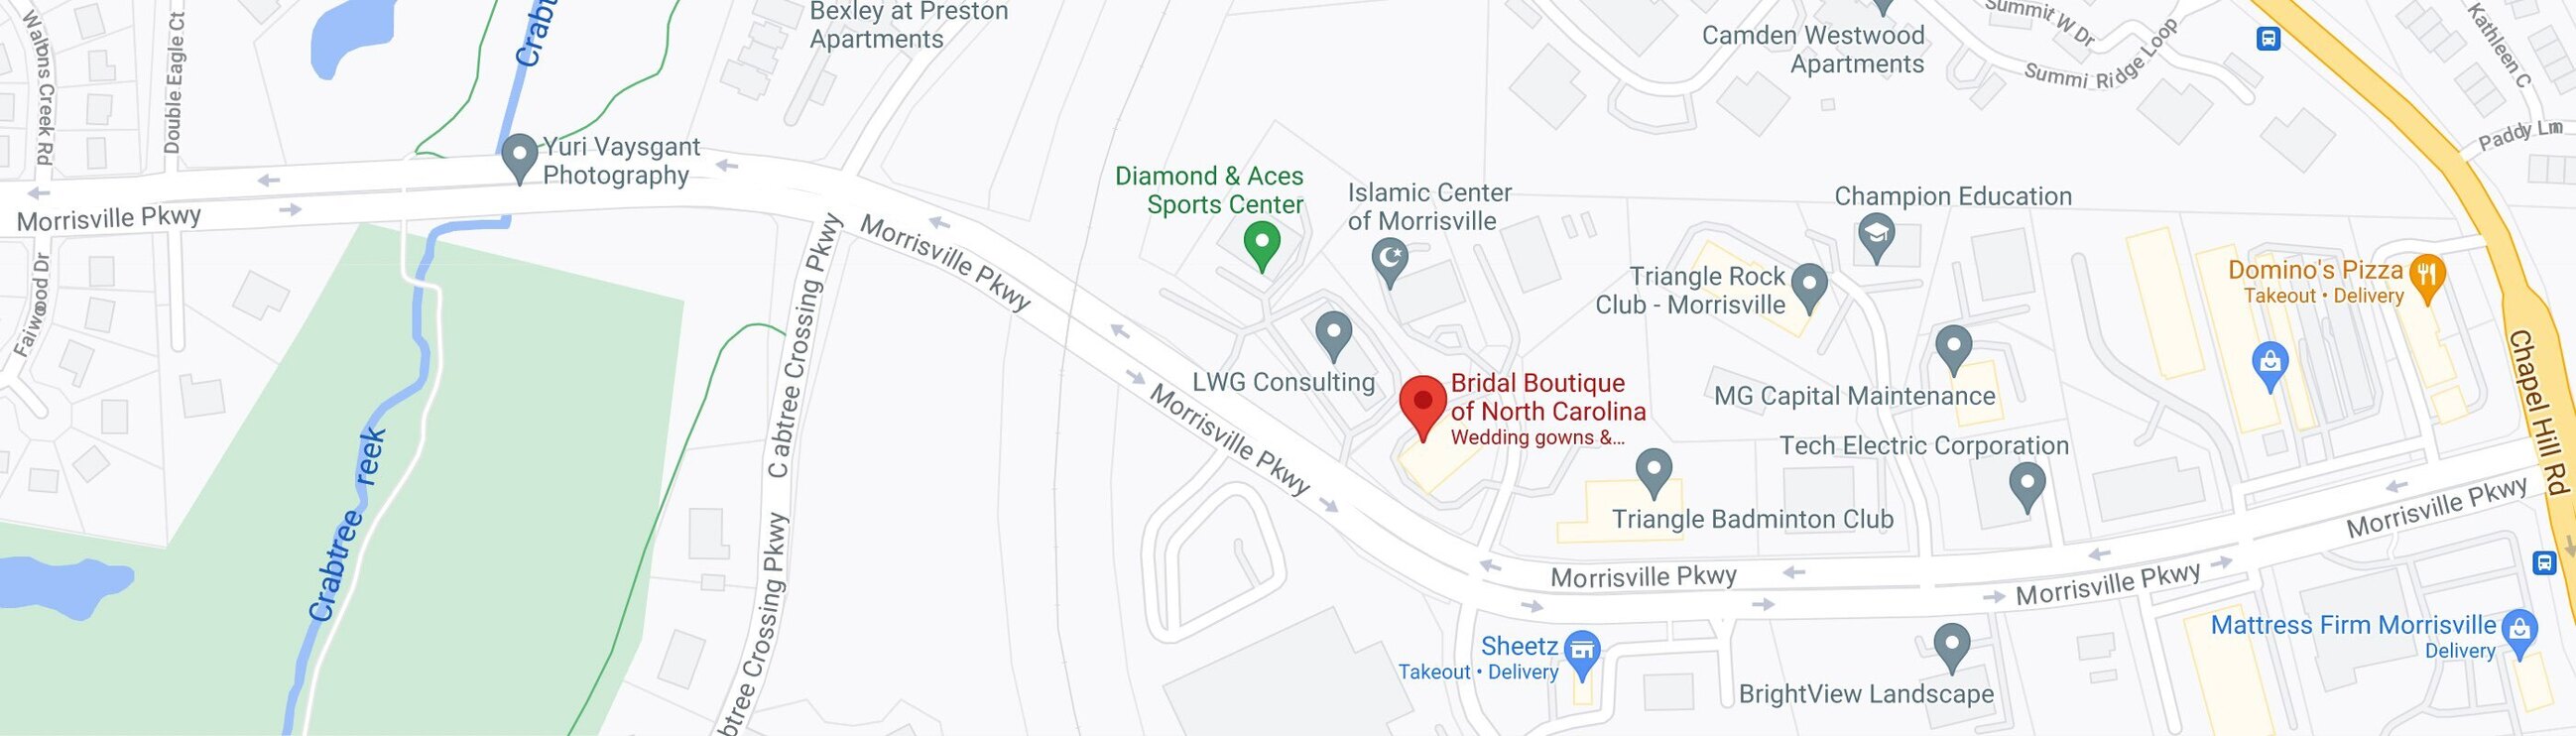 The Bridal Boutique of North Carolina location